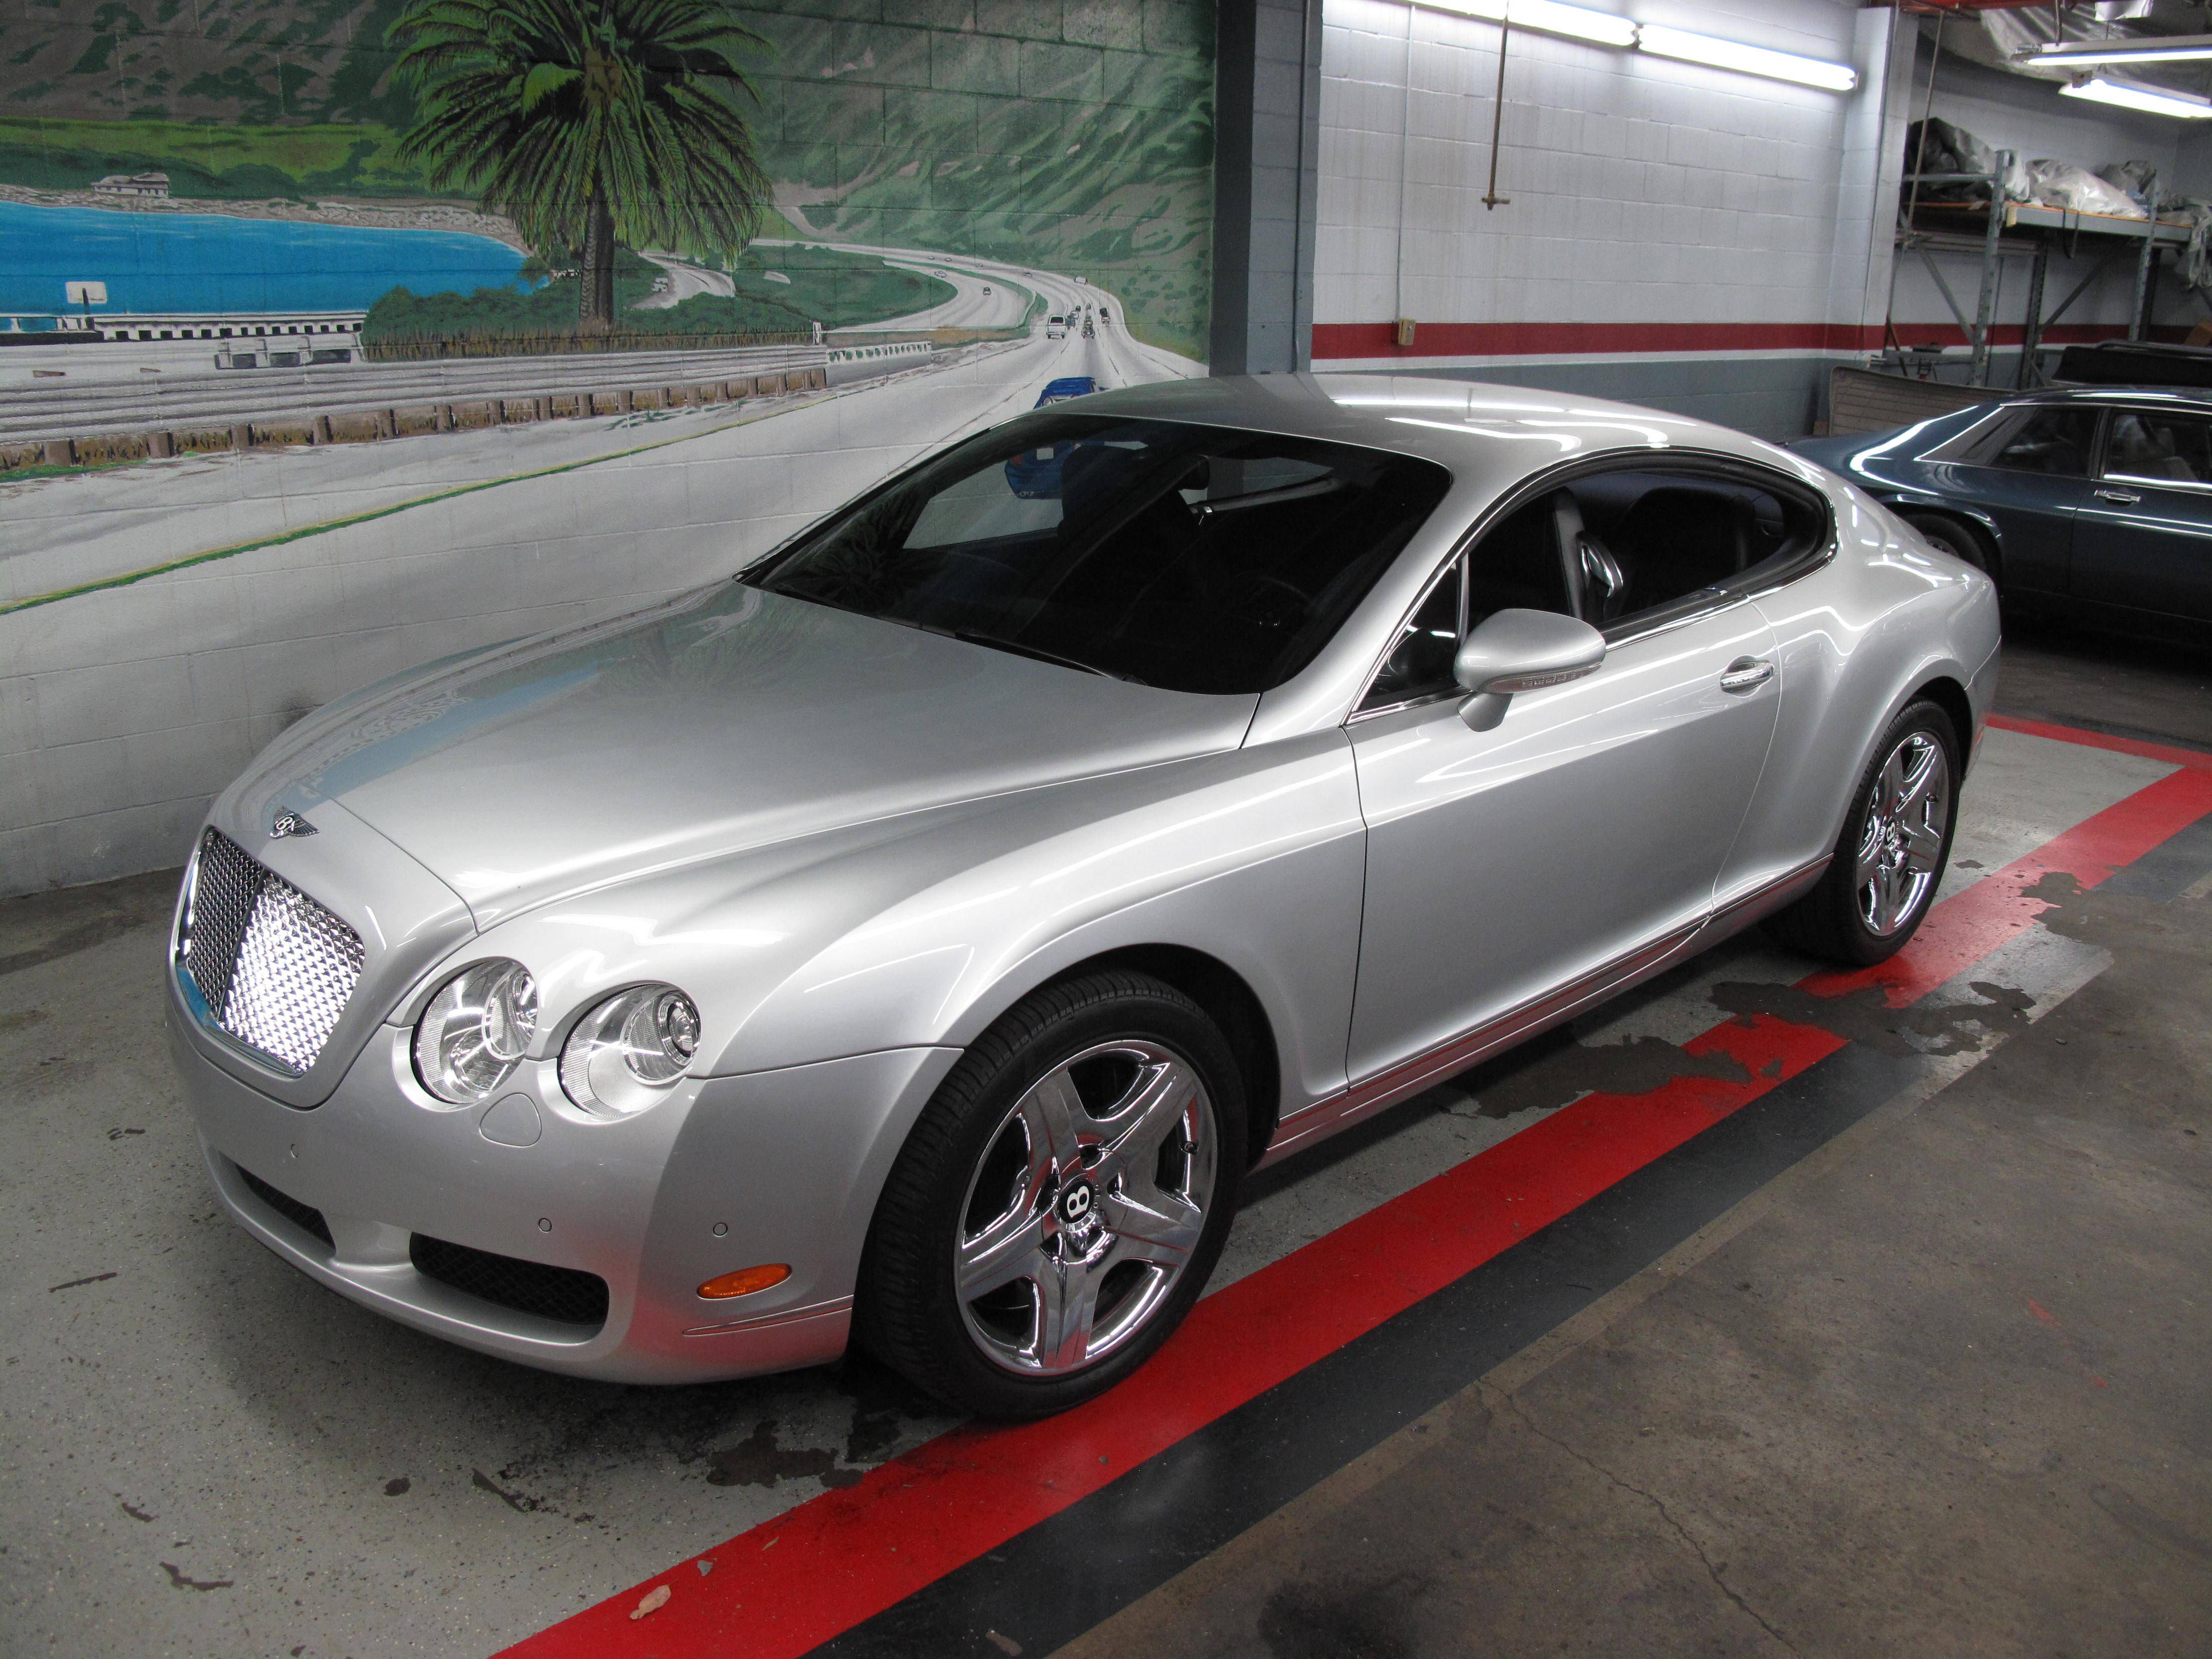 2004 Bentley Continental Gt Chatsworth, California | Hemmings.com